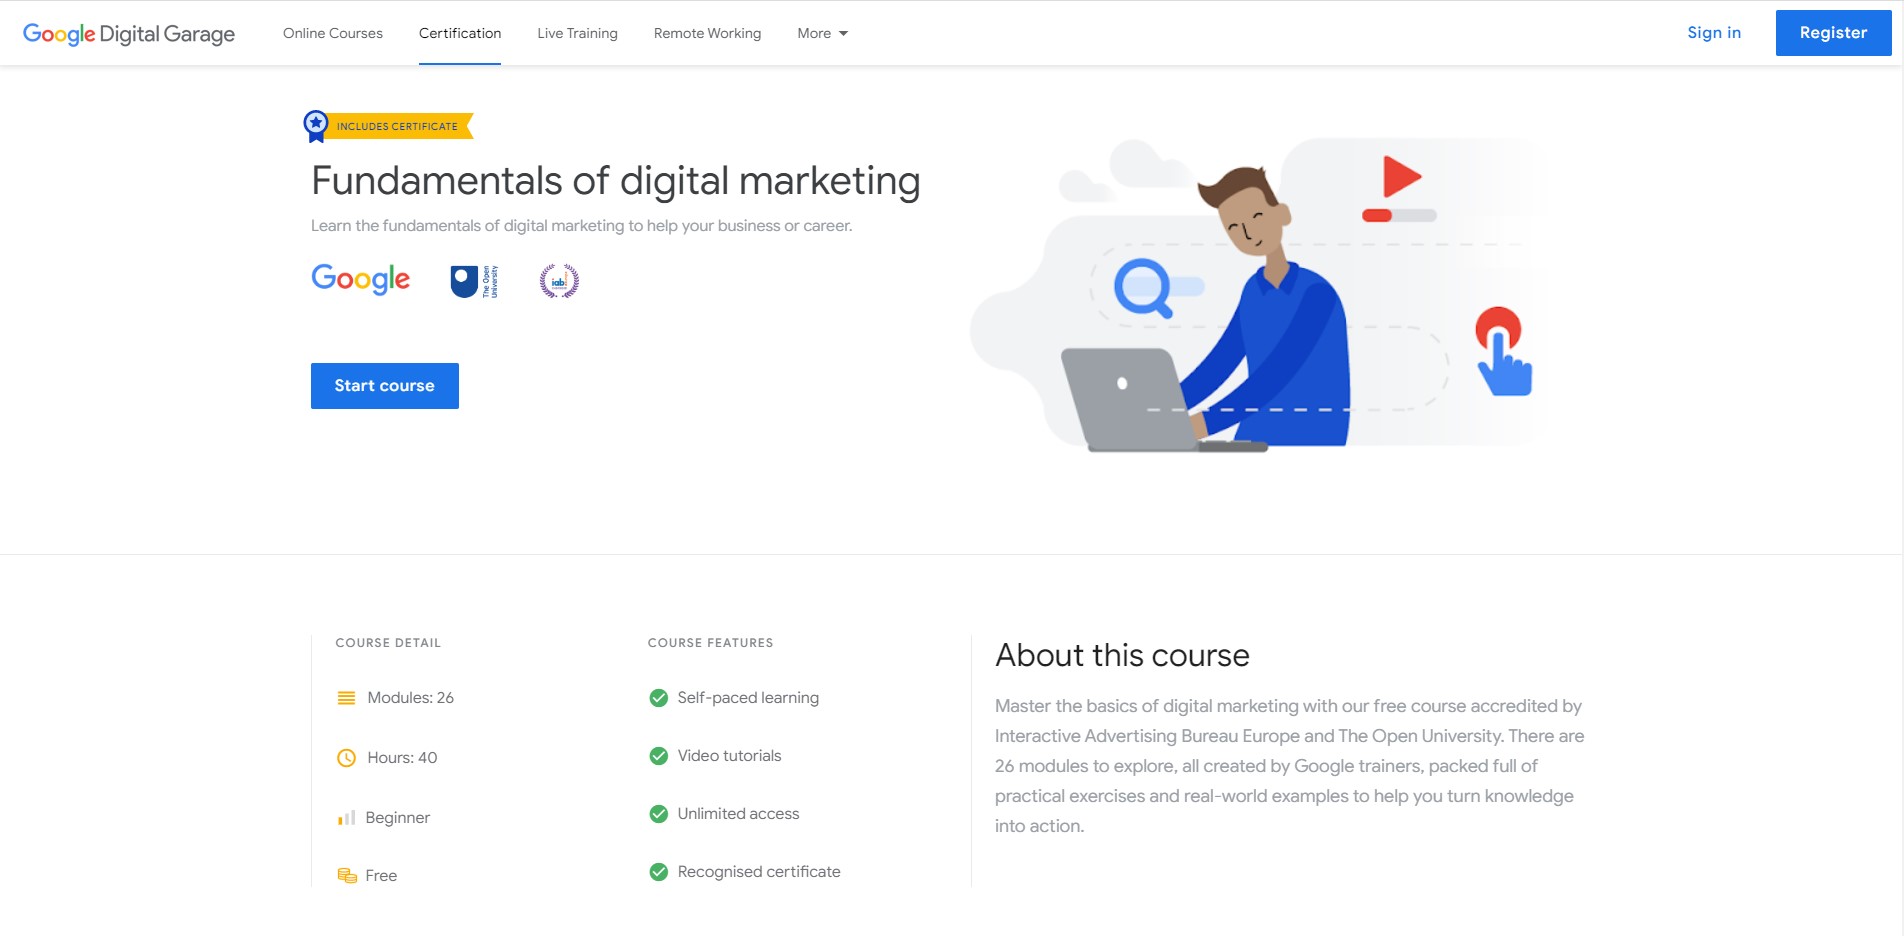 Google Digital Garage one of the best digital marketing courses